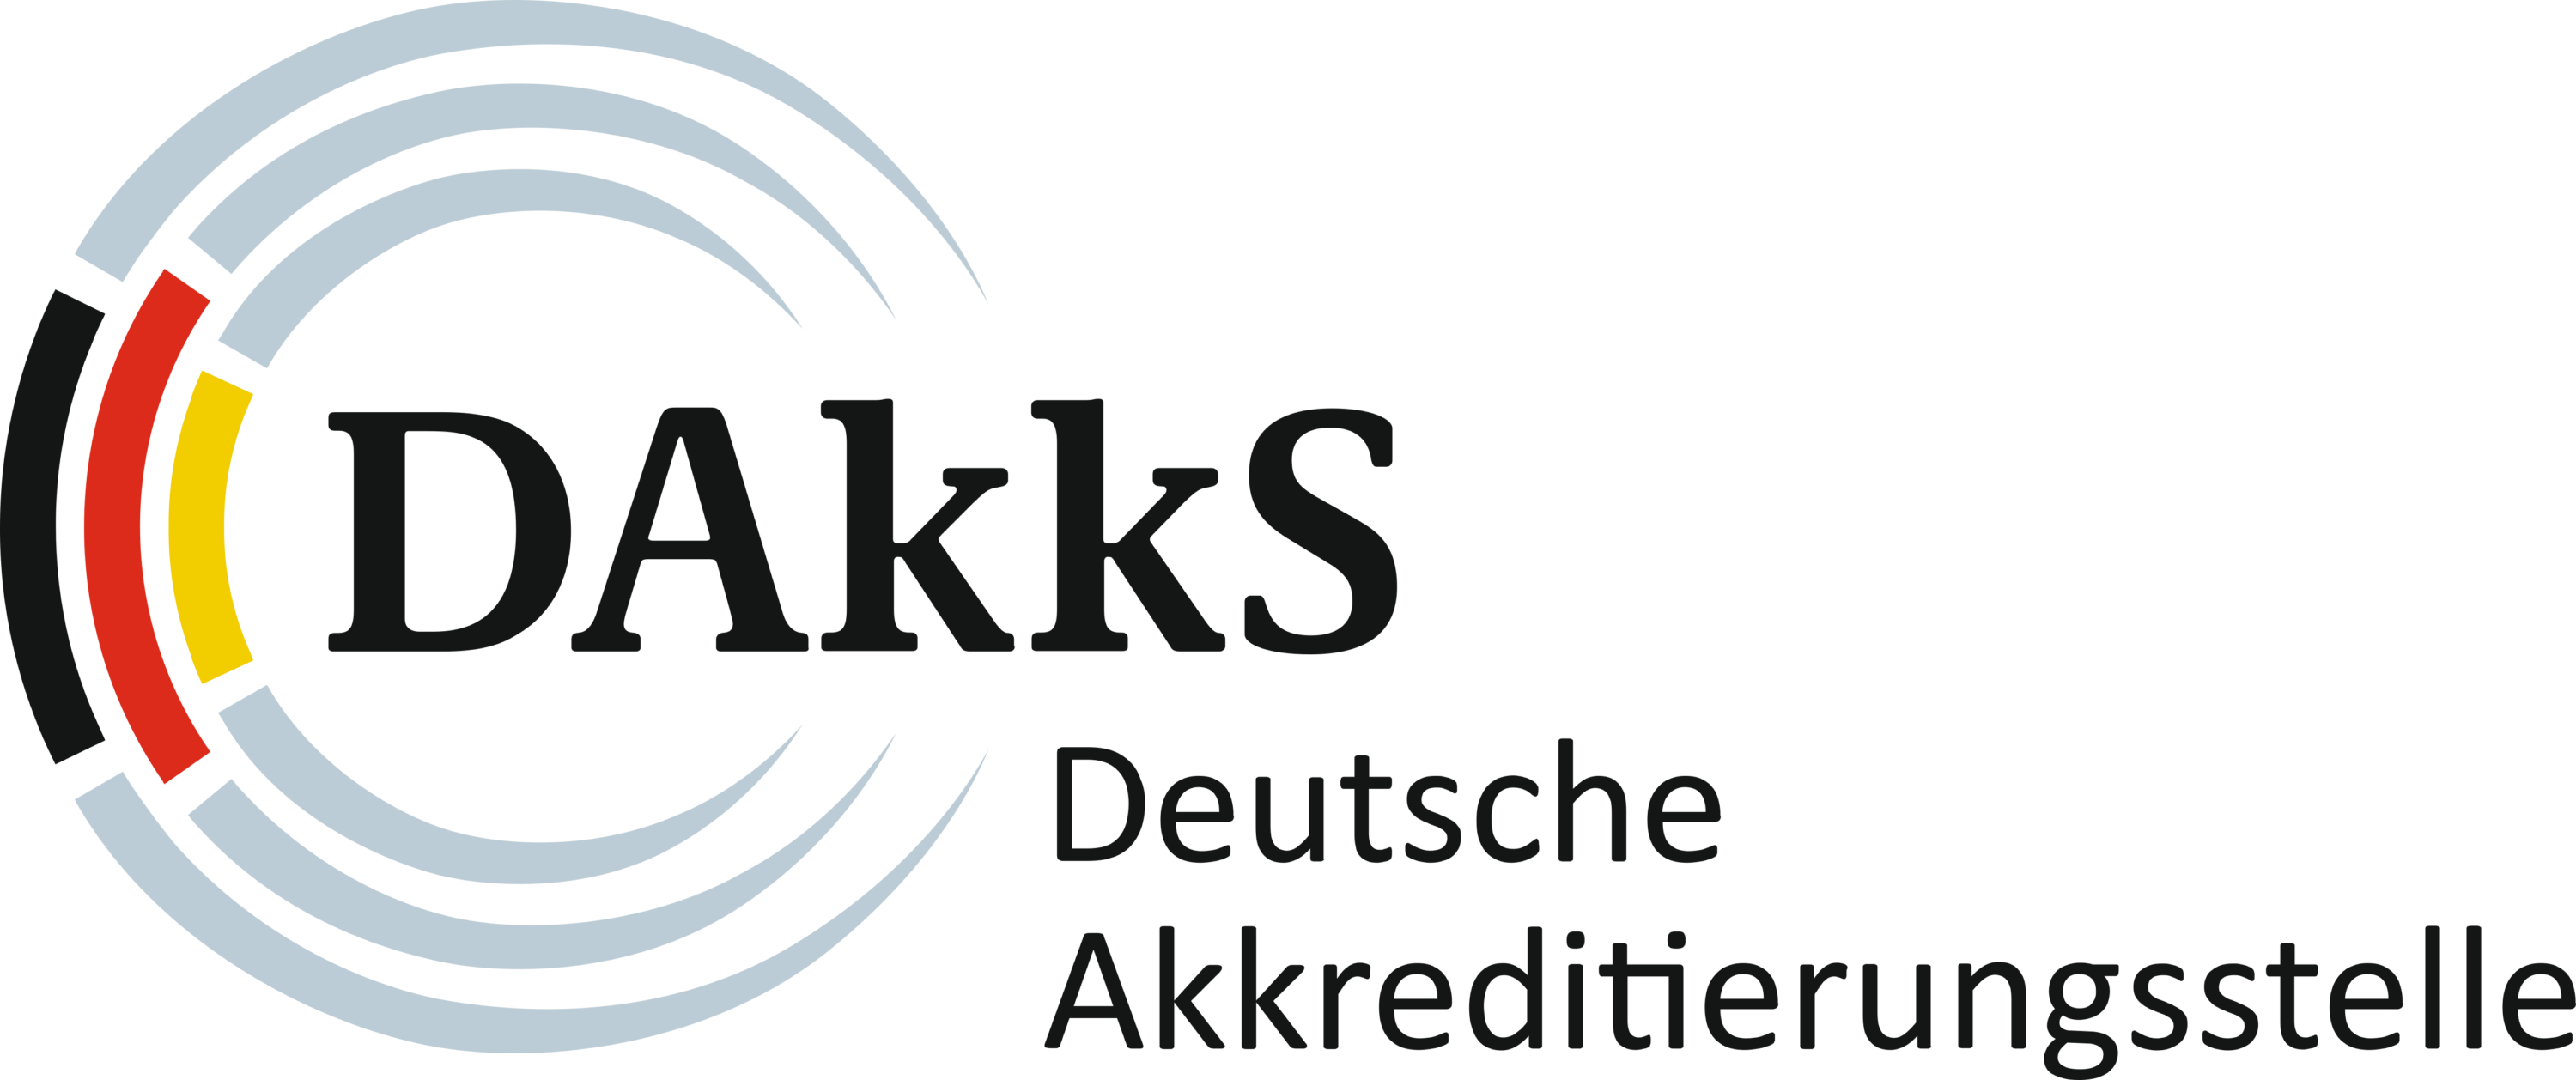 DAkkS Deutsche Akkreditierungsstell Logo